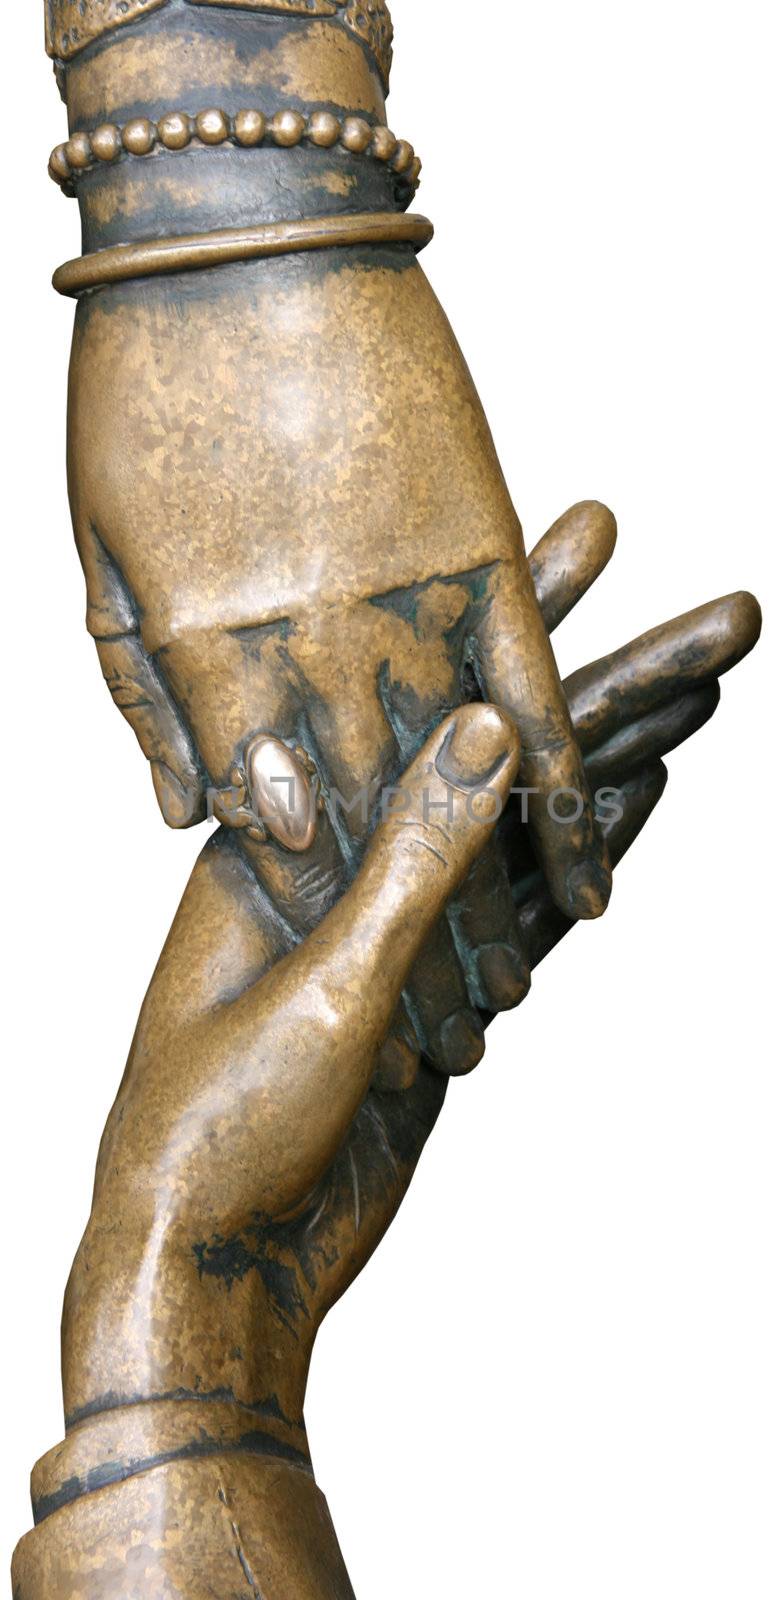 isolated bronze figurine of newlyweds hands